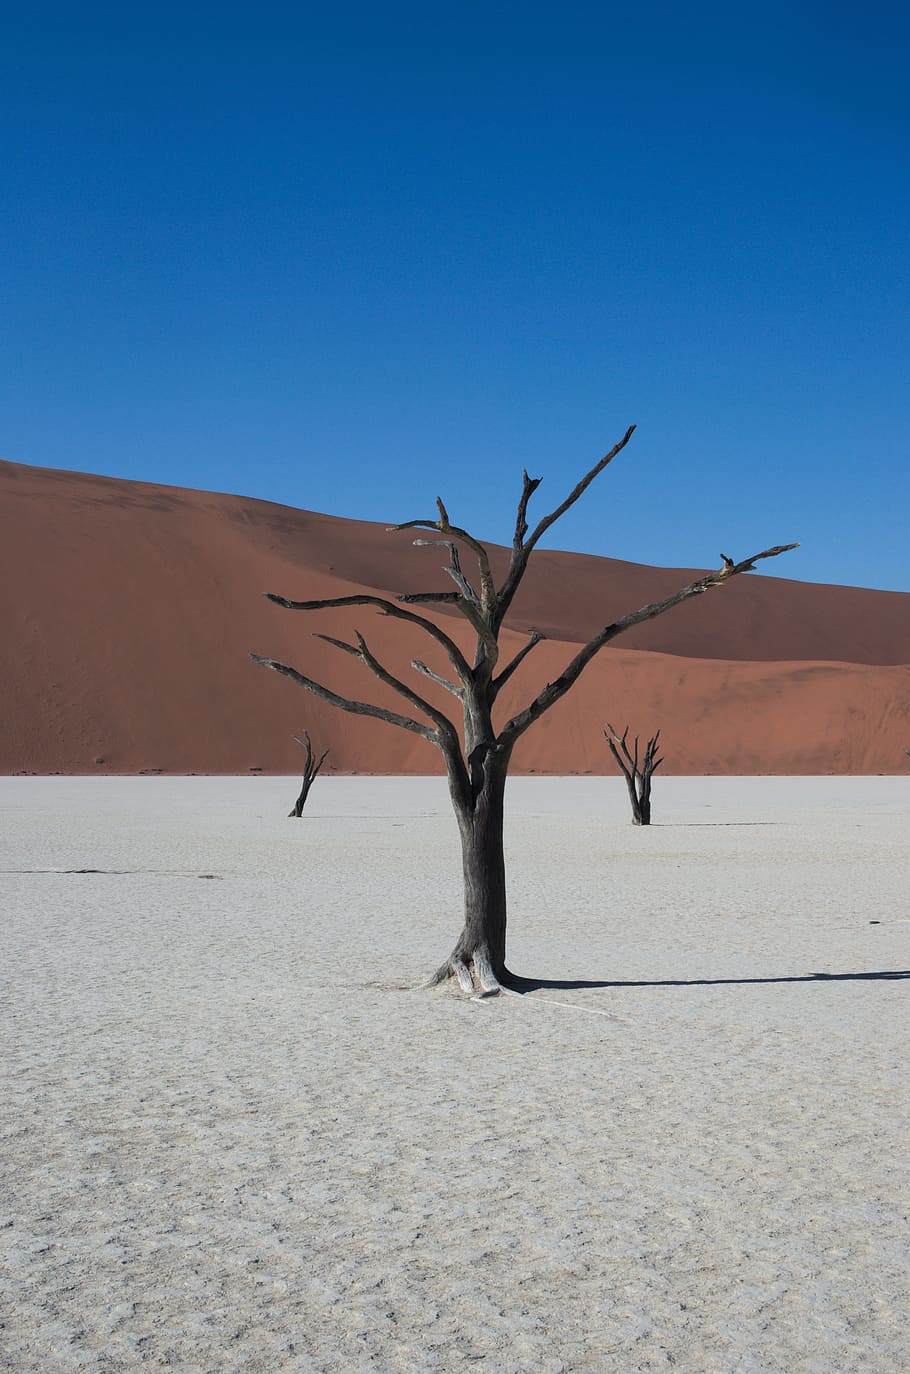 Deadvlei, Namibia, Desert, Dry, Tree, dry, tree, bare tree, arid climate, clear sky, dead plant